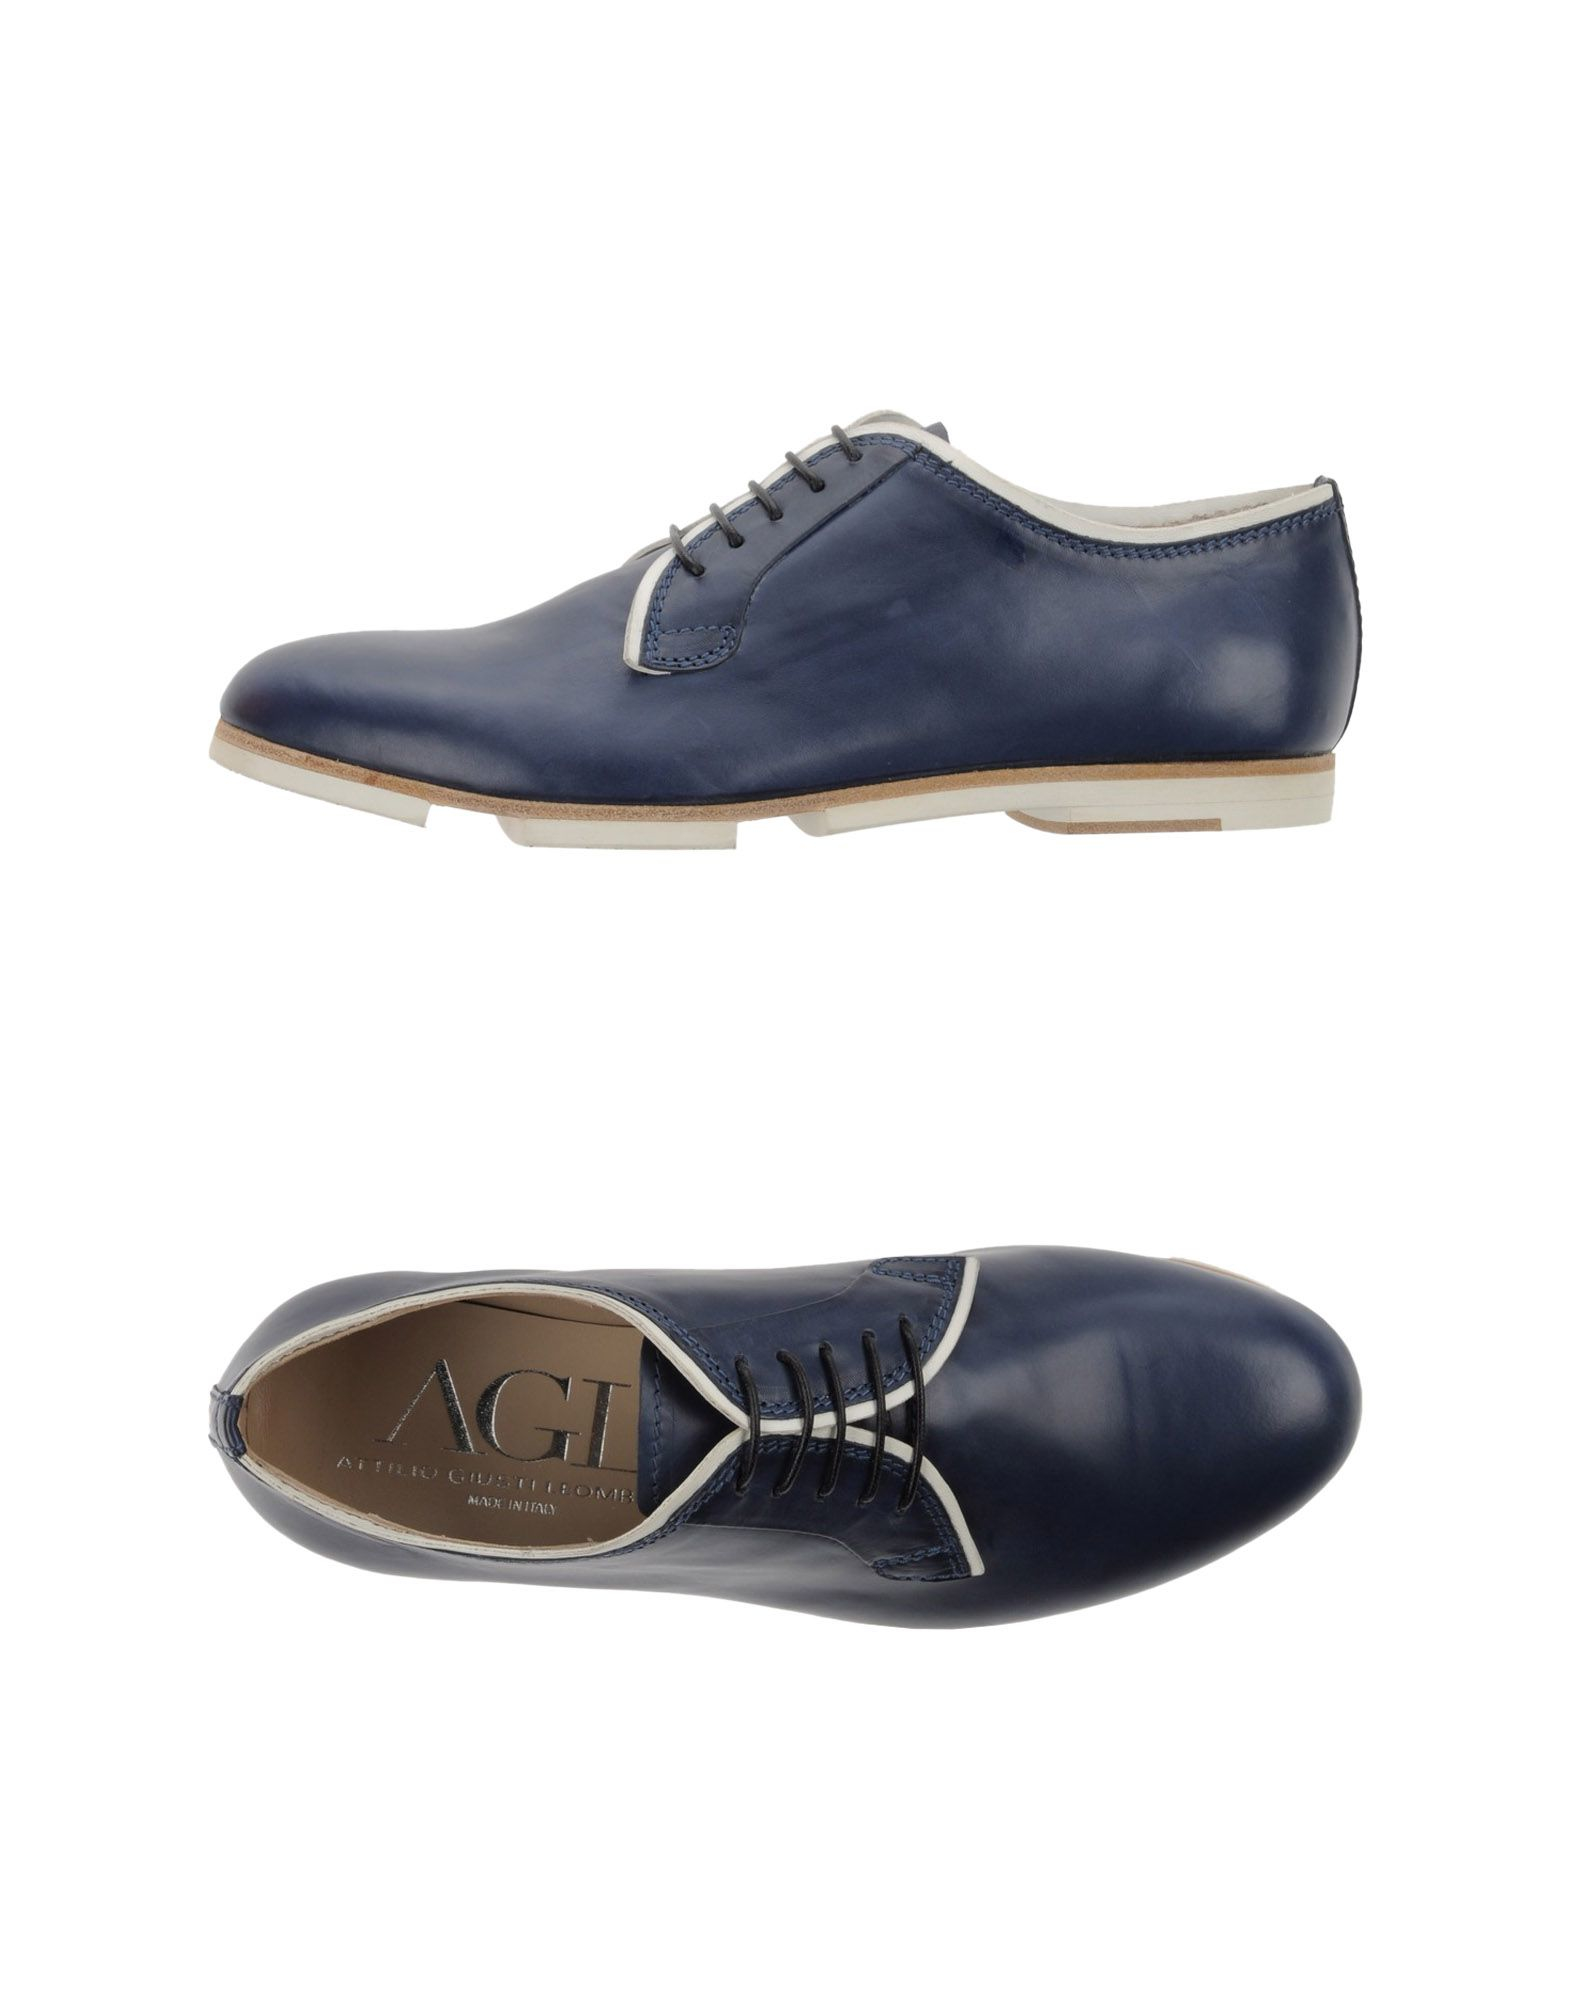 Attilio Giusti Leombruni / AGL Italian Shoes tailored 